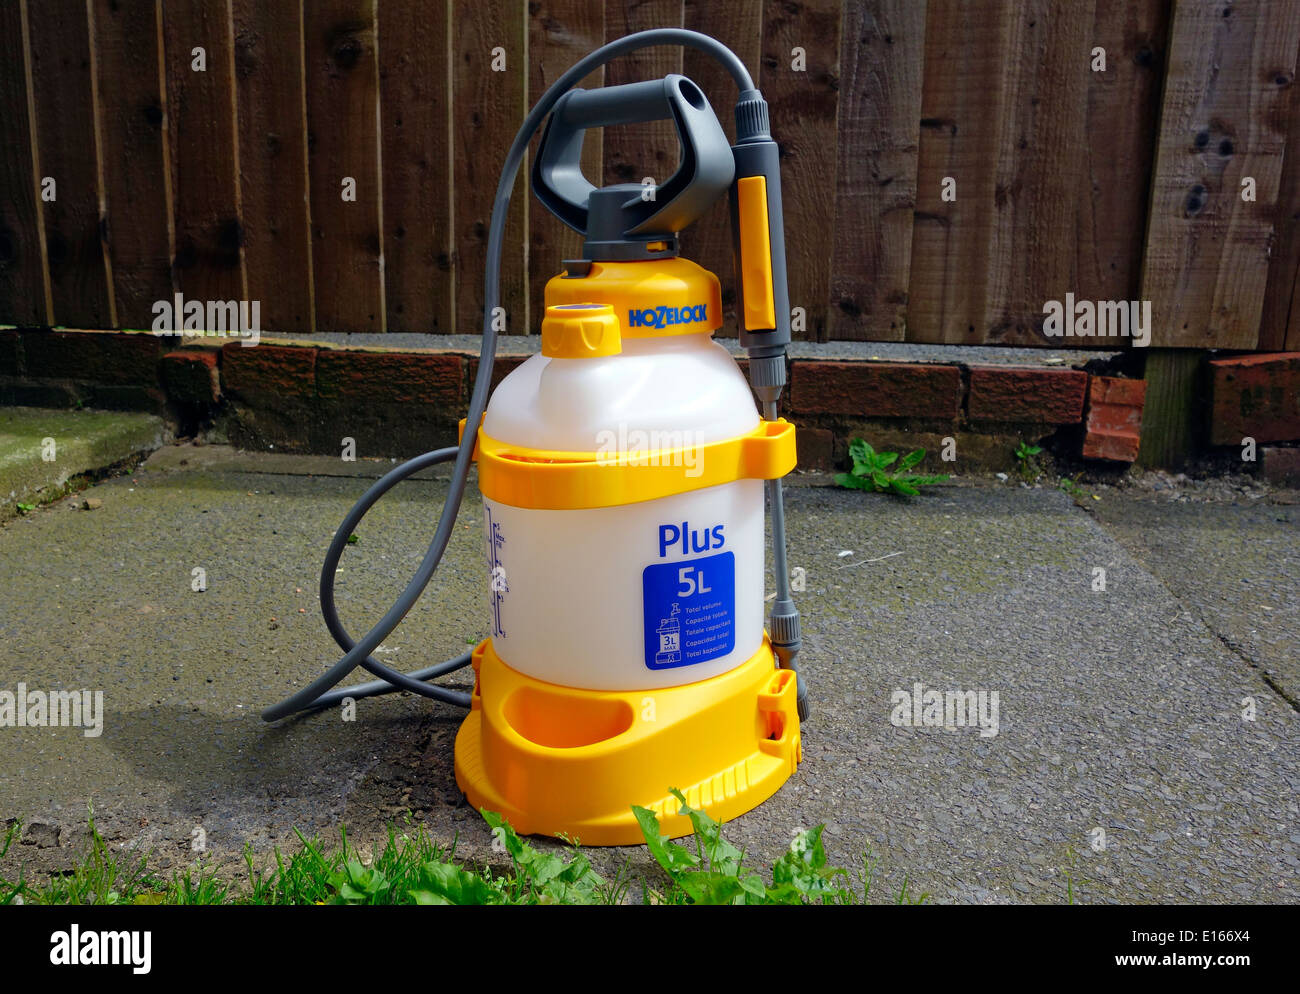 Hozelock Garden Pressure Sprayer, UK Stock Photo